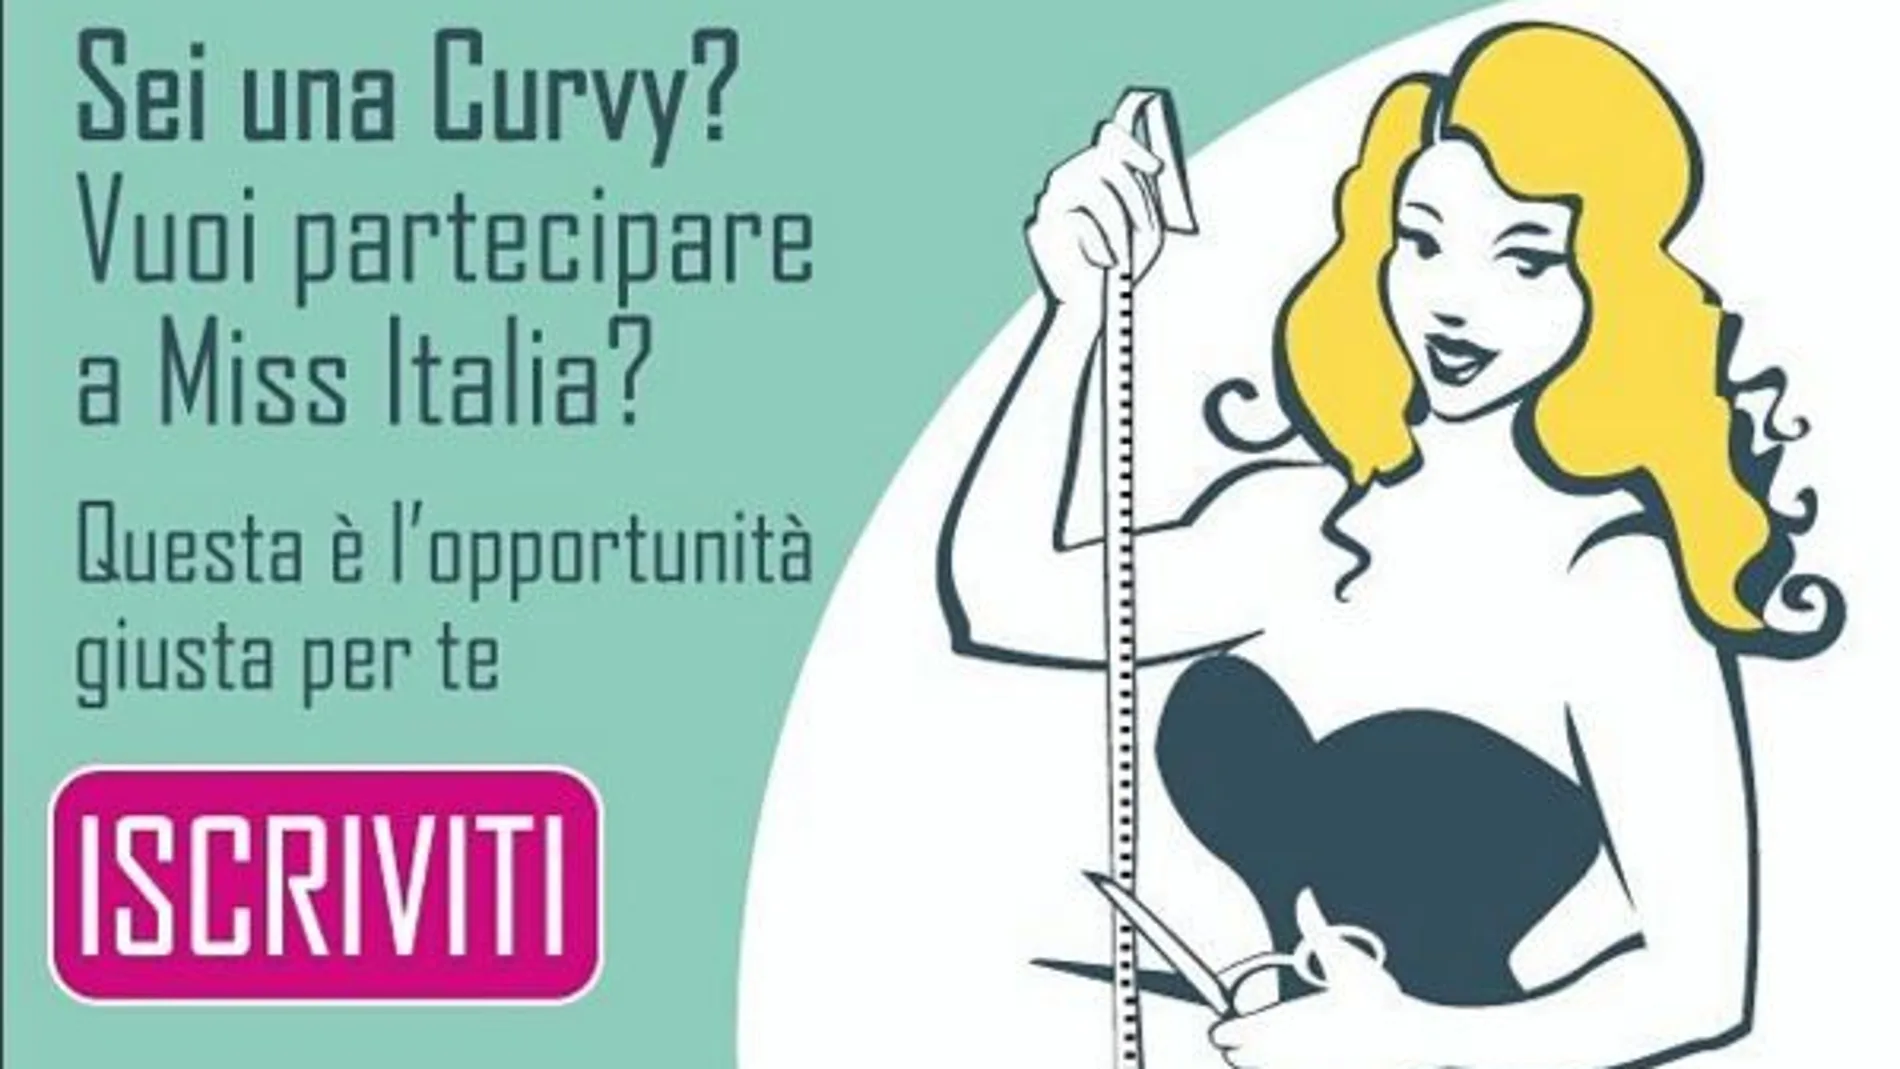 Miss Italia busca chicas con curvas